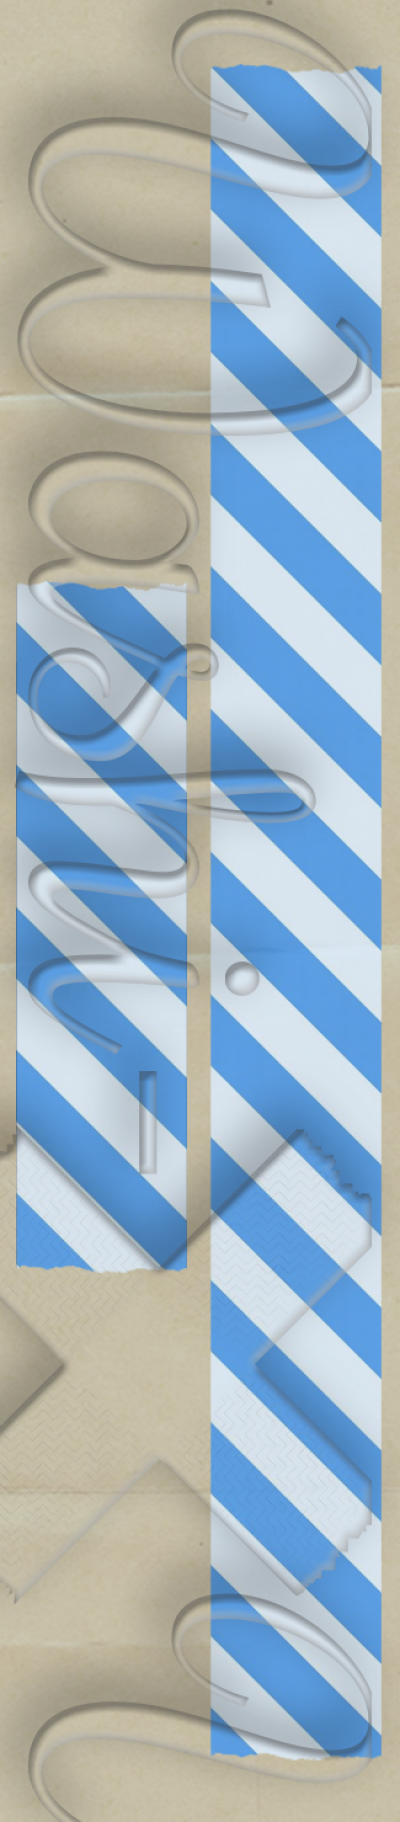 Blue lines patterned washi tape